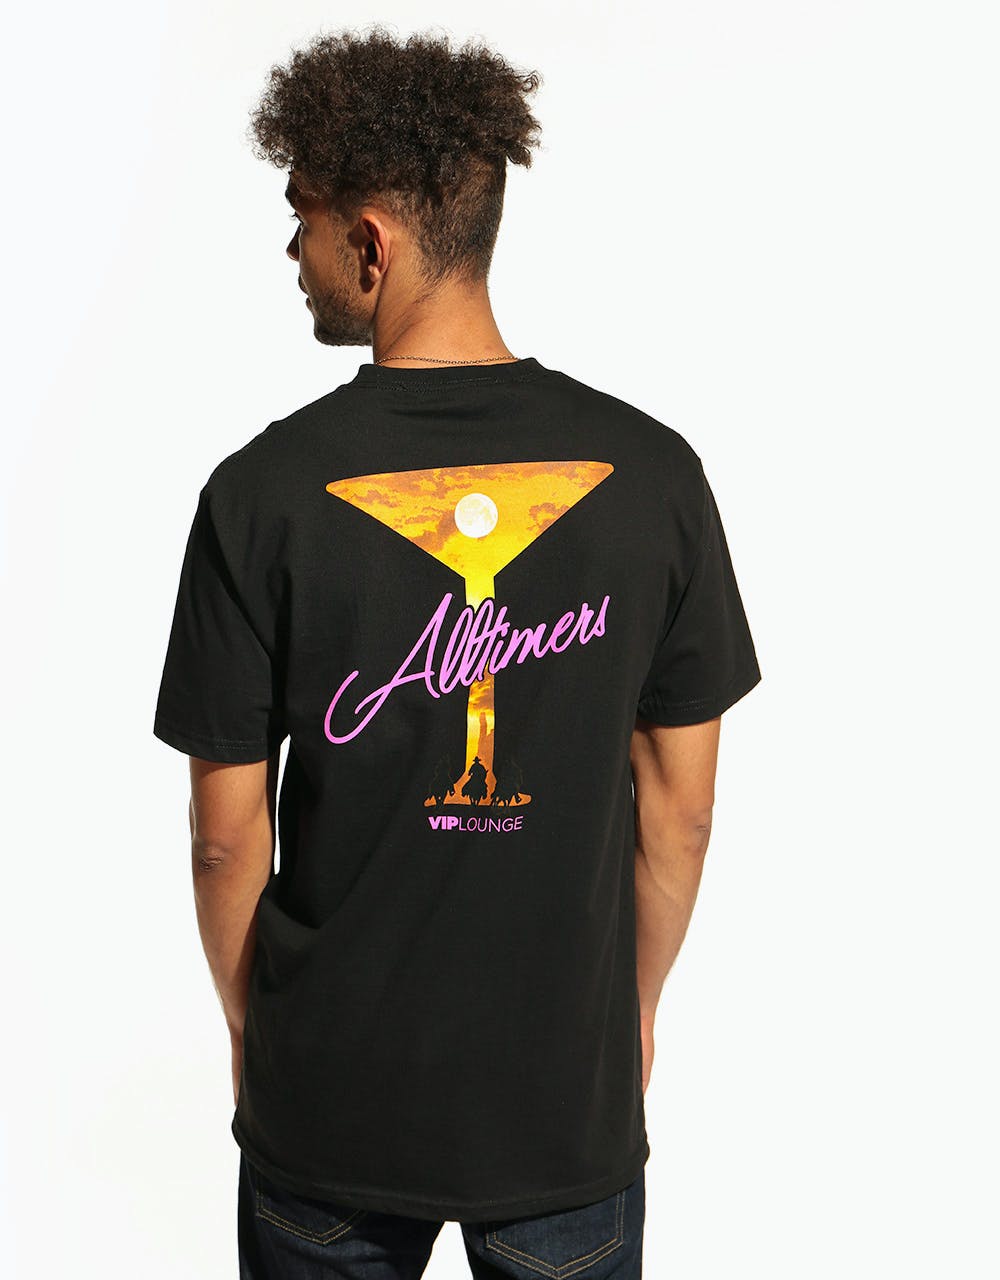 Alltimers 3 Amigos T-Shirt - Black